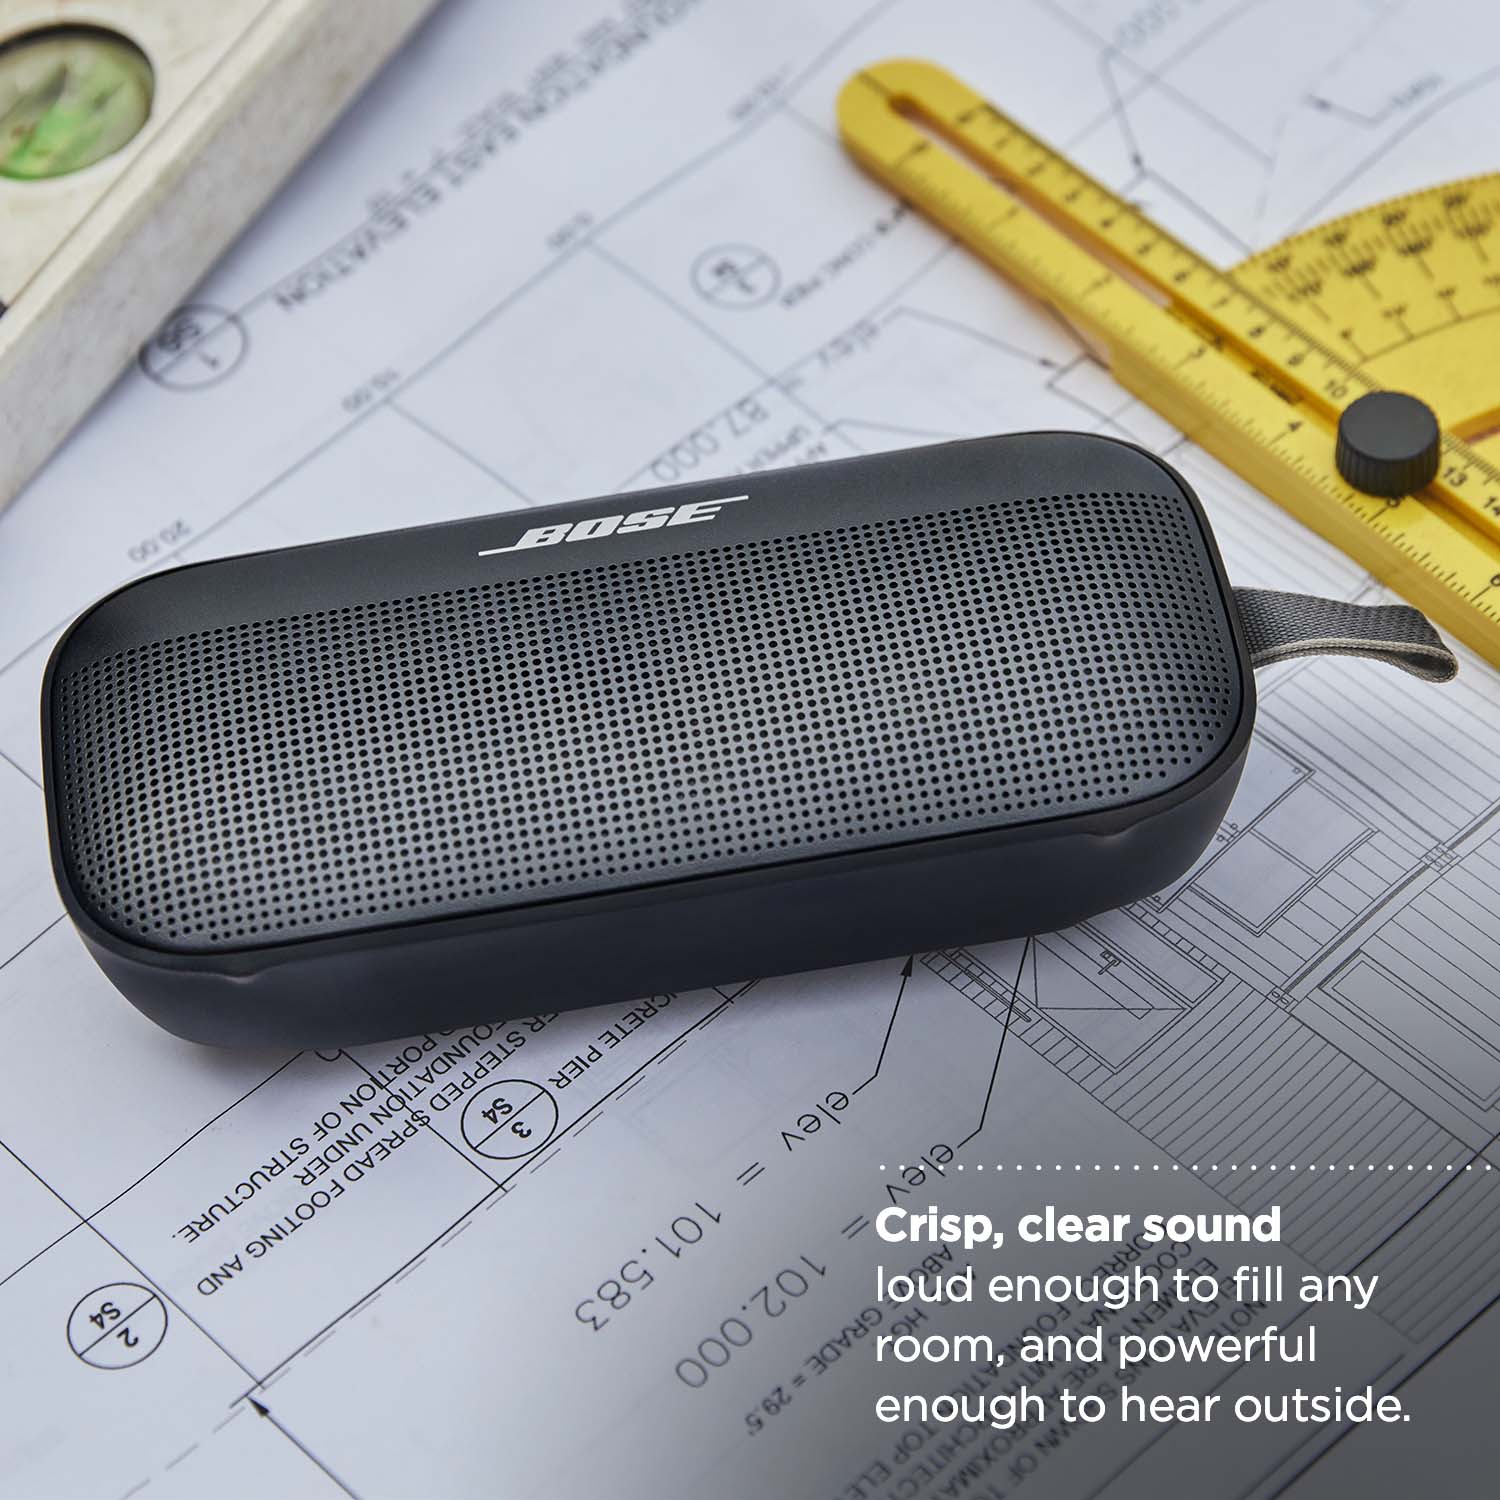 Bose SoundLink Flex Portable Waterproof Bluetooth Speaker, Black - image 2 of 10